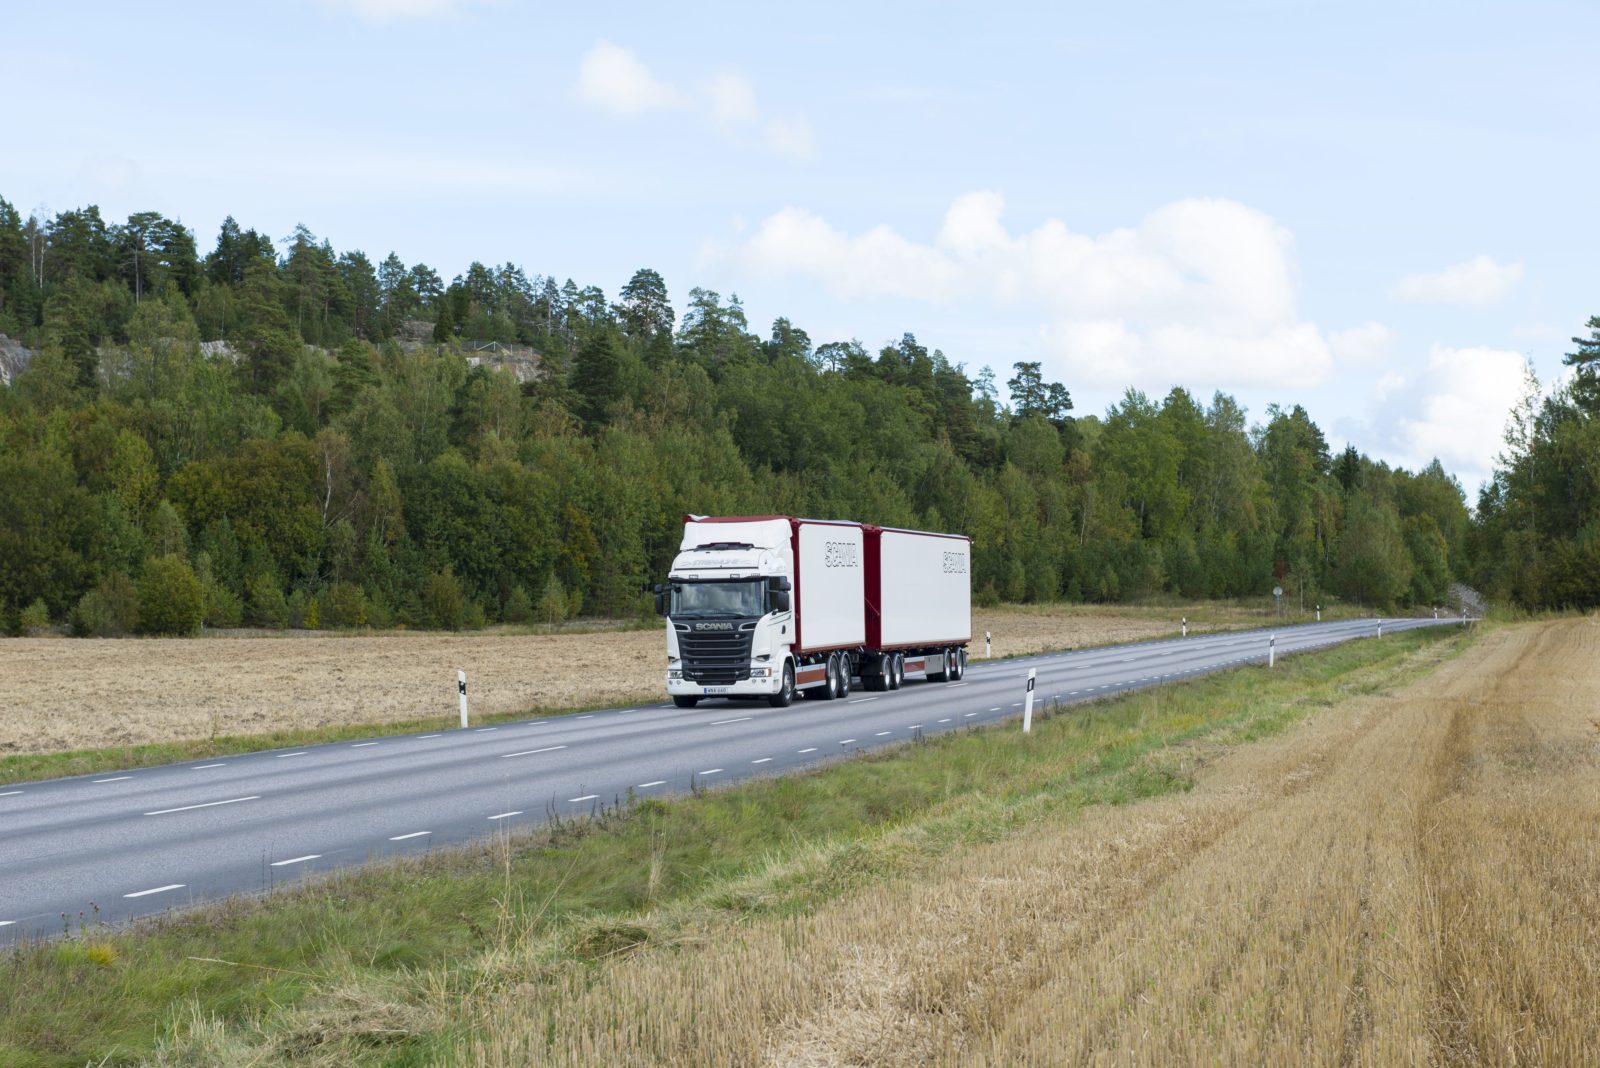 Scania R 580 6x2 Highline wood chip transport with trailer. Biodiesel.
Nykvarn, Sweden
Photo: Peggy Bergman 2015